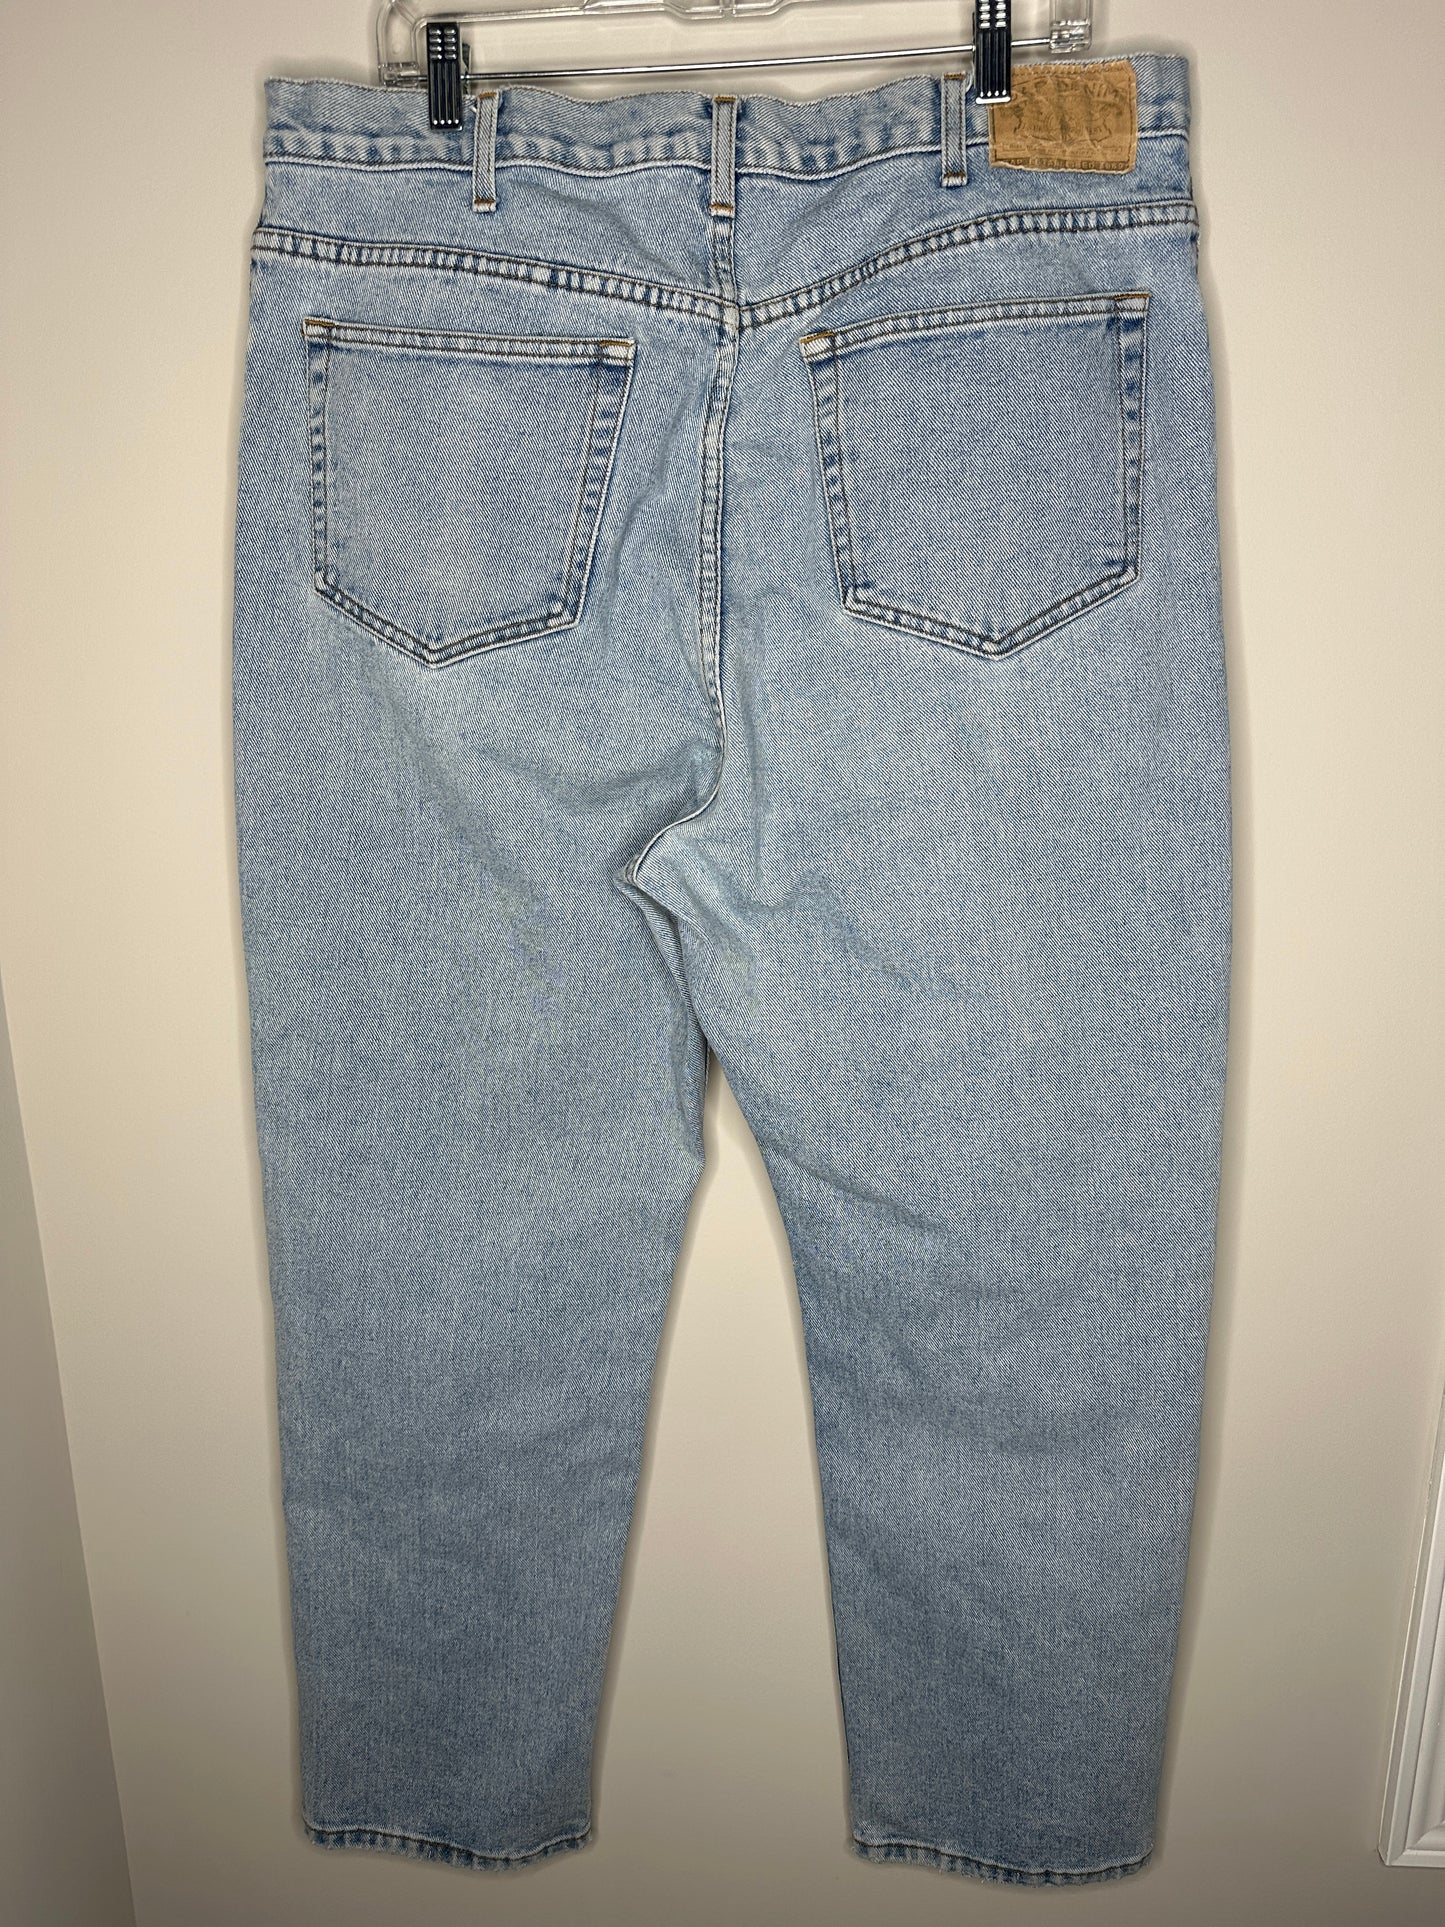 Gap Denim Men's Size 40 x 30 Light Wash Blue Denim Jeans